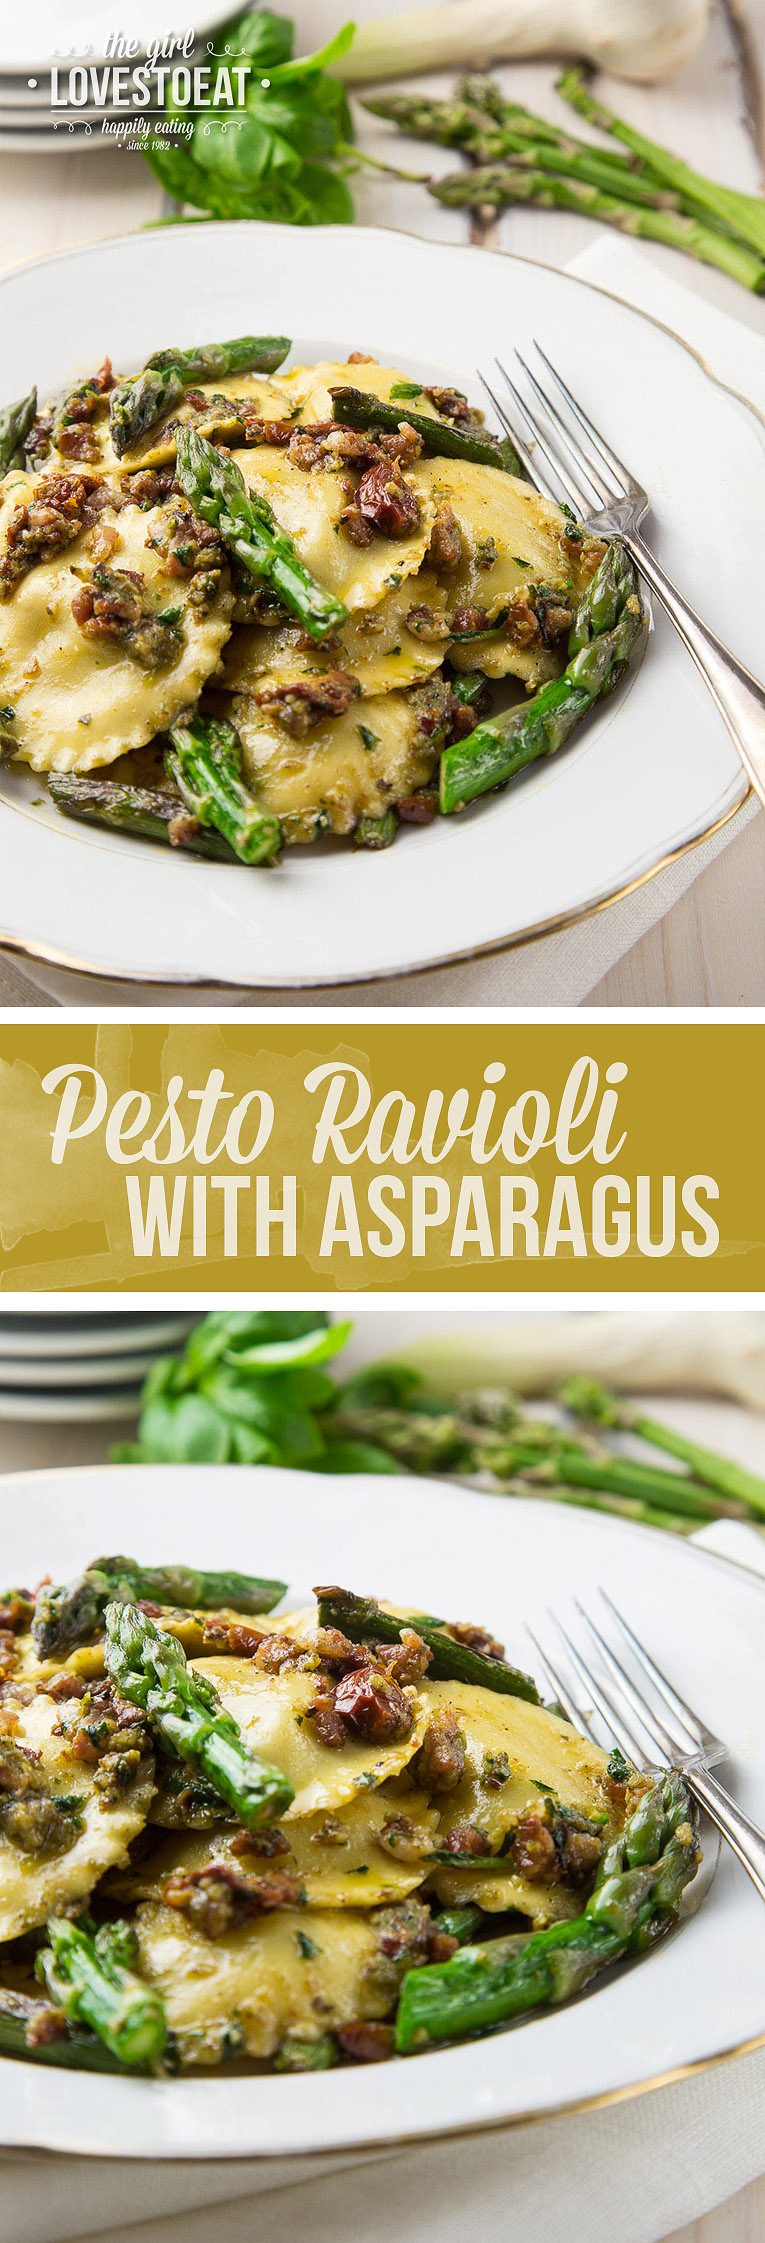 Pesto ravioli with asparagus { thegirllovestoeat.com }